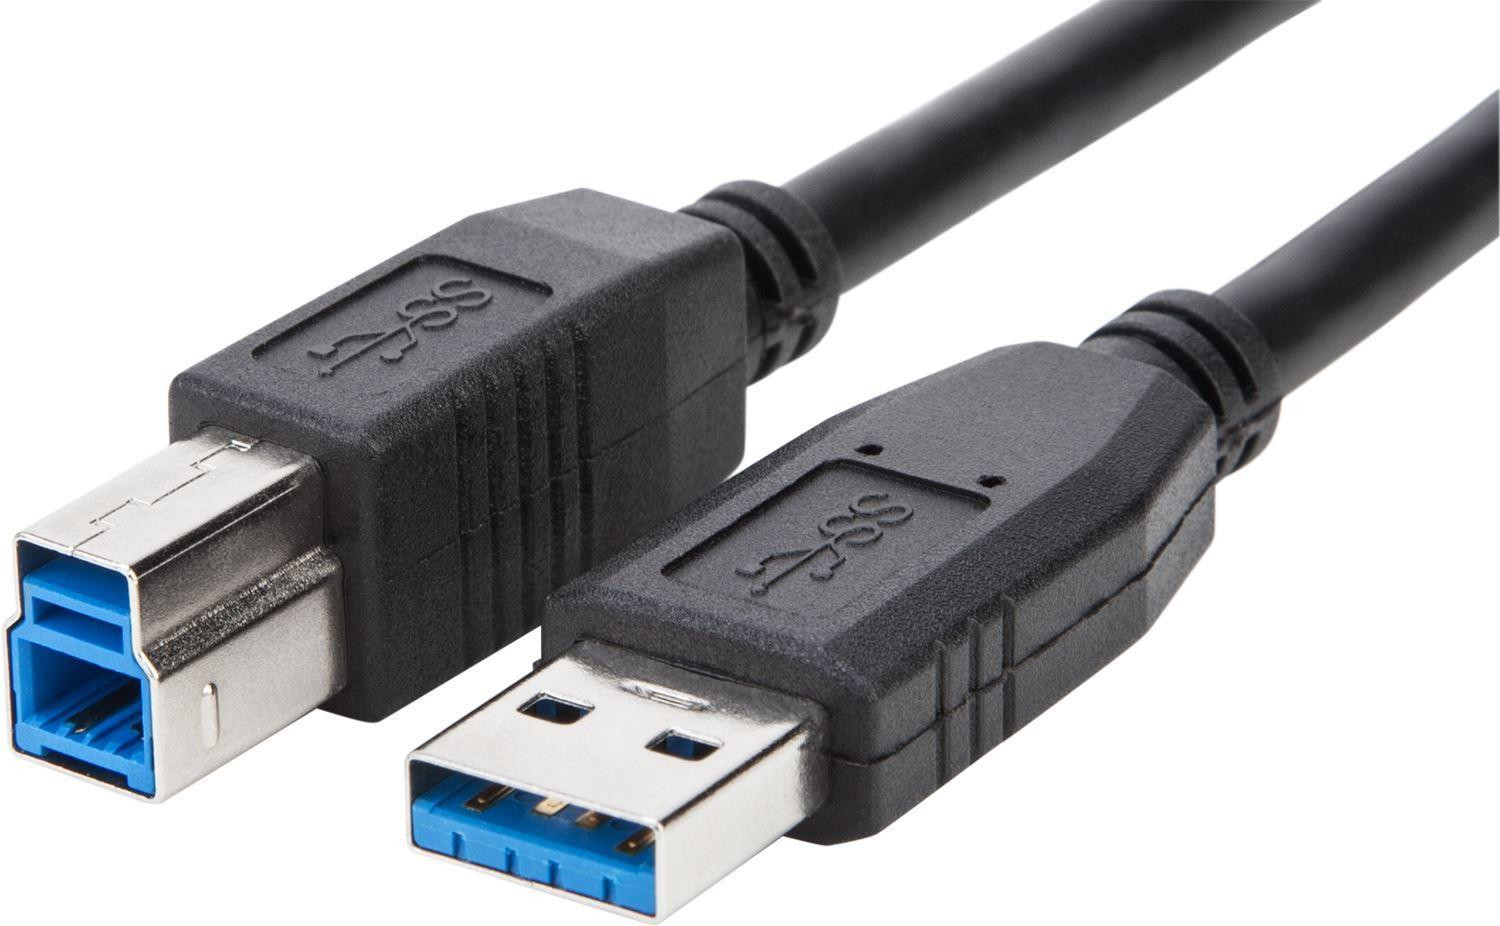 Targus USB 3.0 A naar USB 3.0 B kabel M/M 1.83m